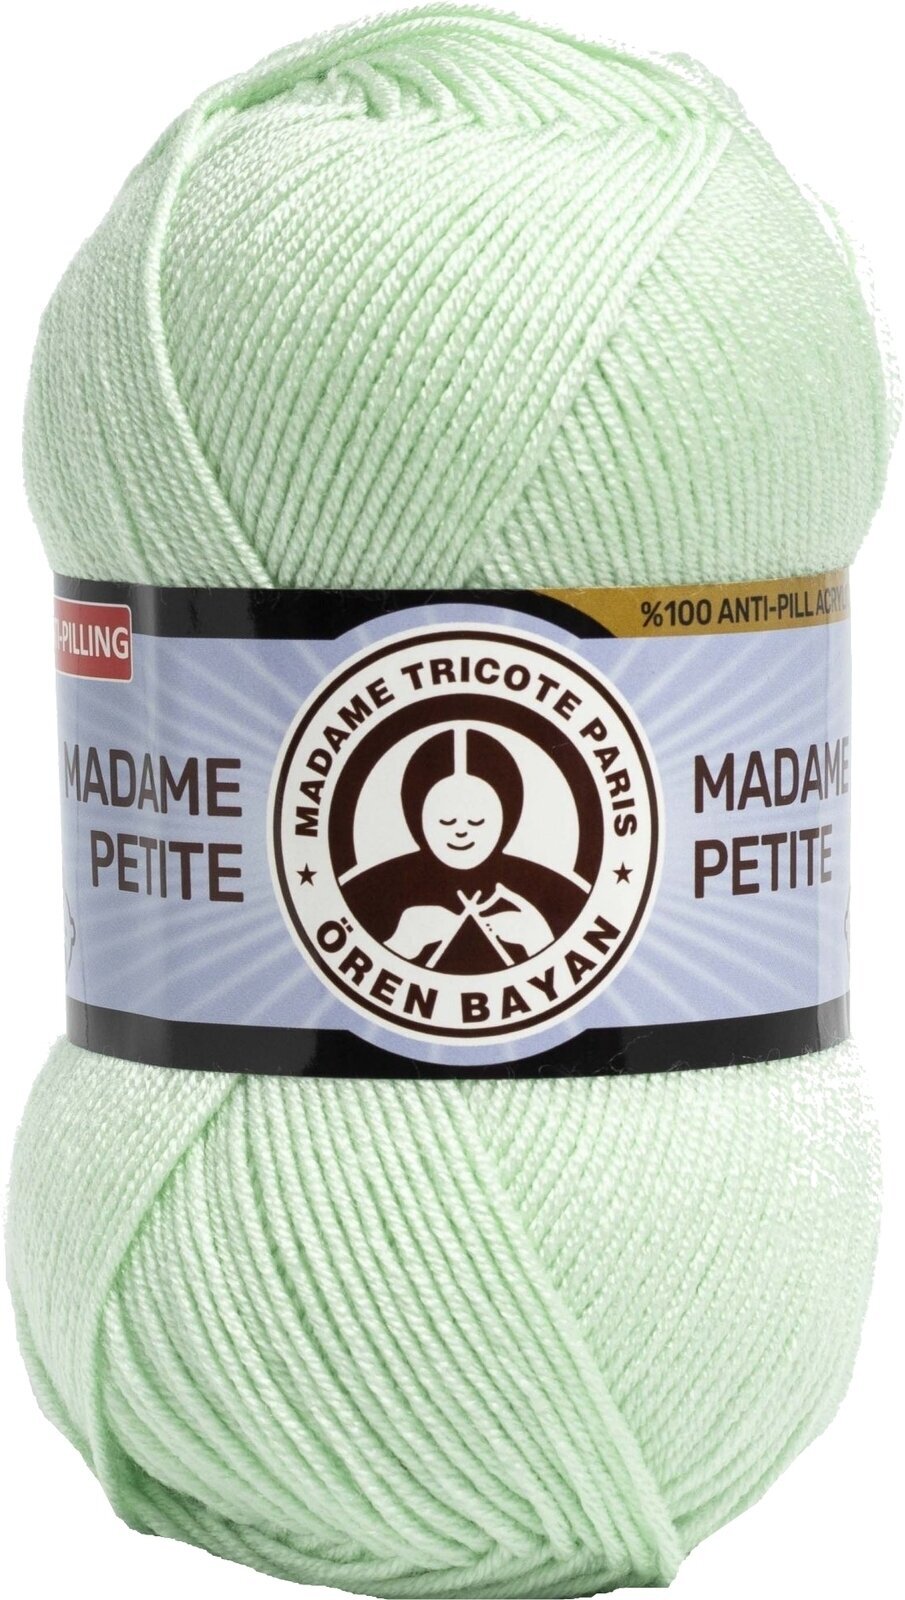 Strikkegarn Madame Tricote Paris Madame Petite 3848 90 Strikkegarn